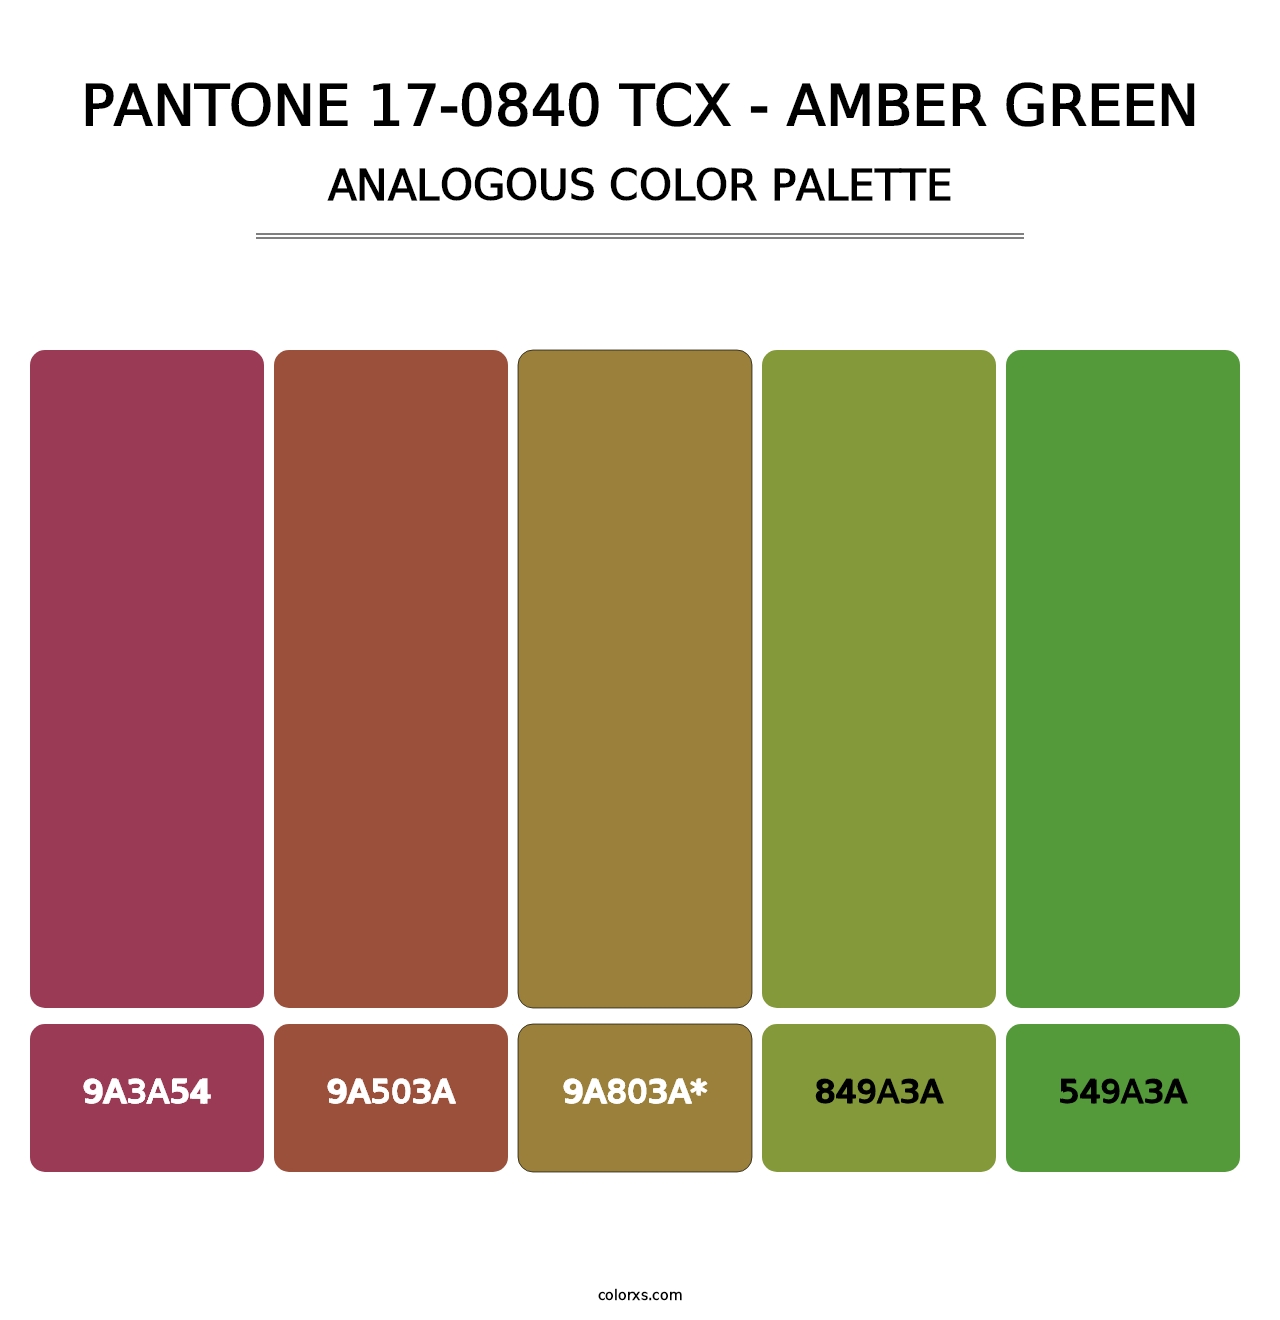 PANTONE 17-0840 TCX - Amber Green - Analogous Color Palette